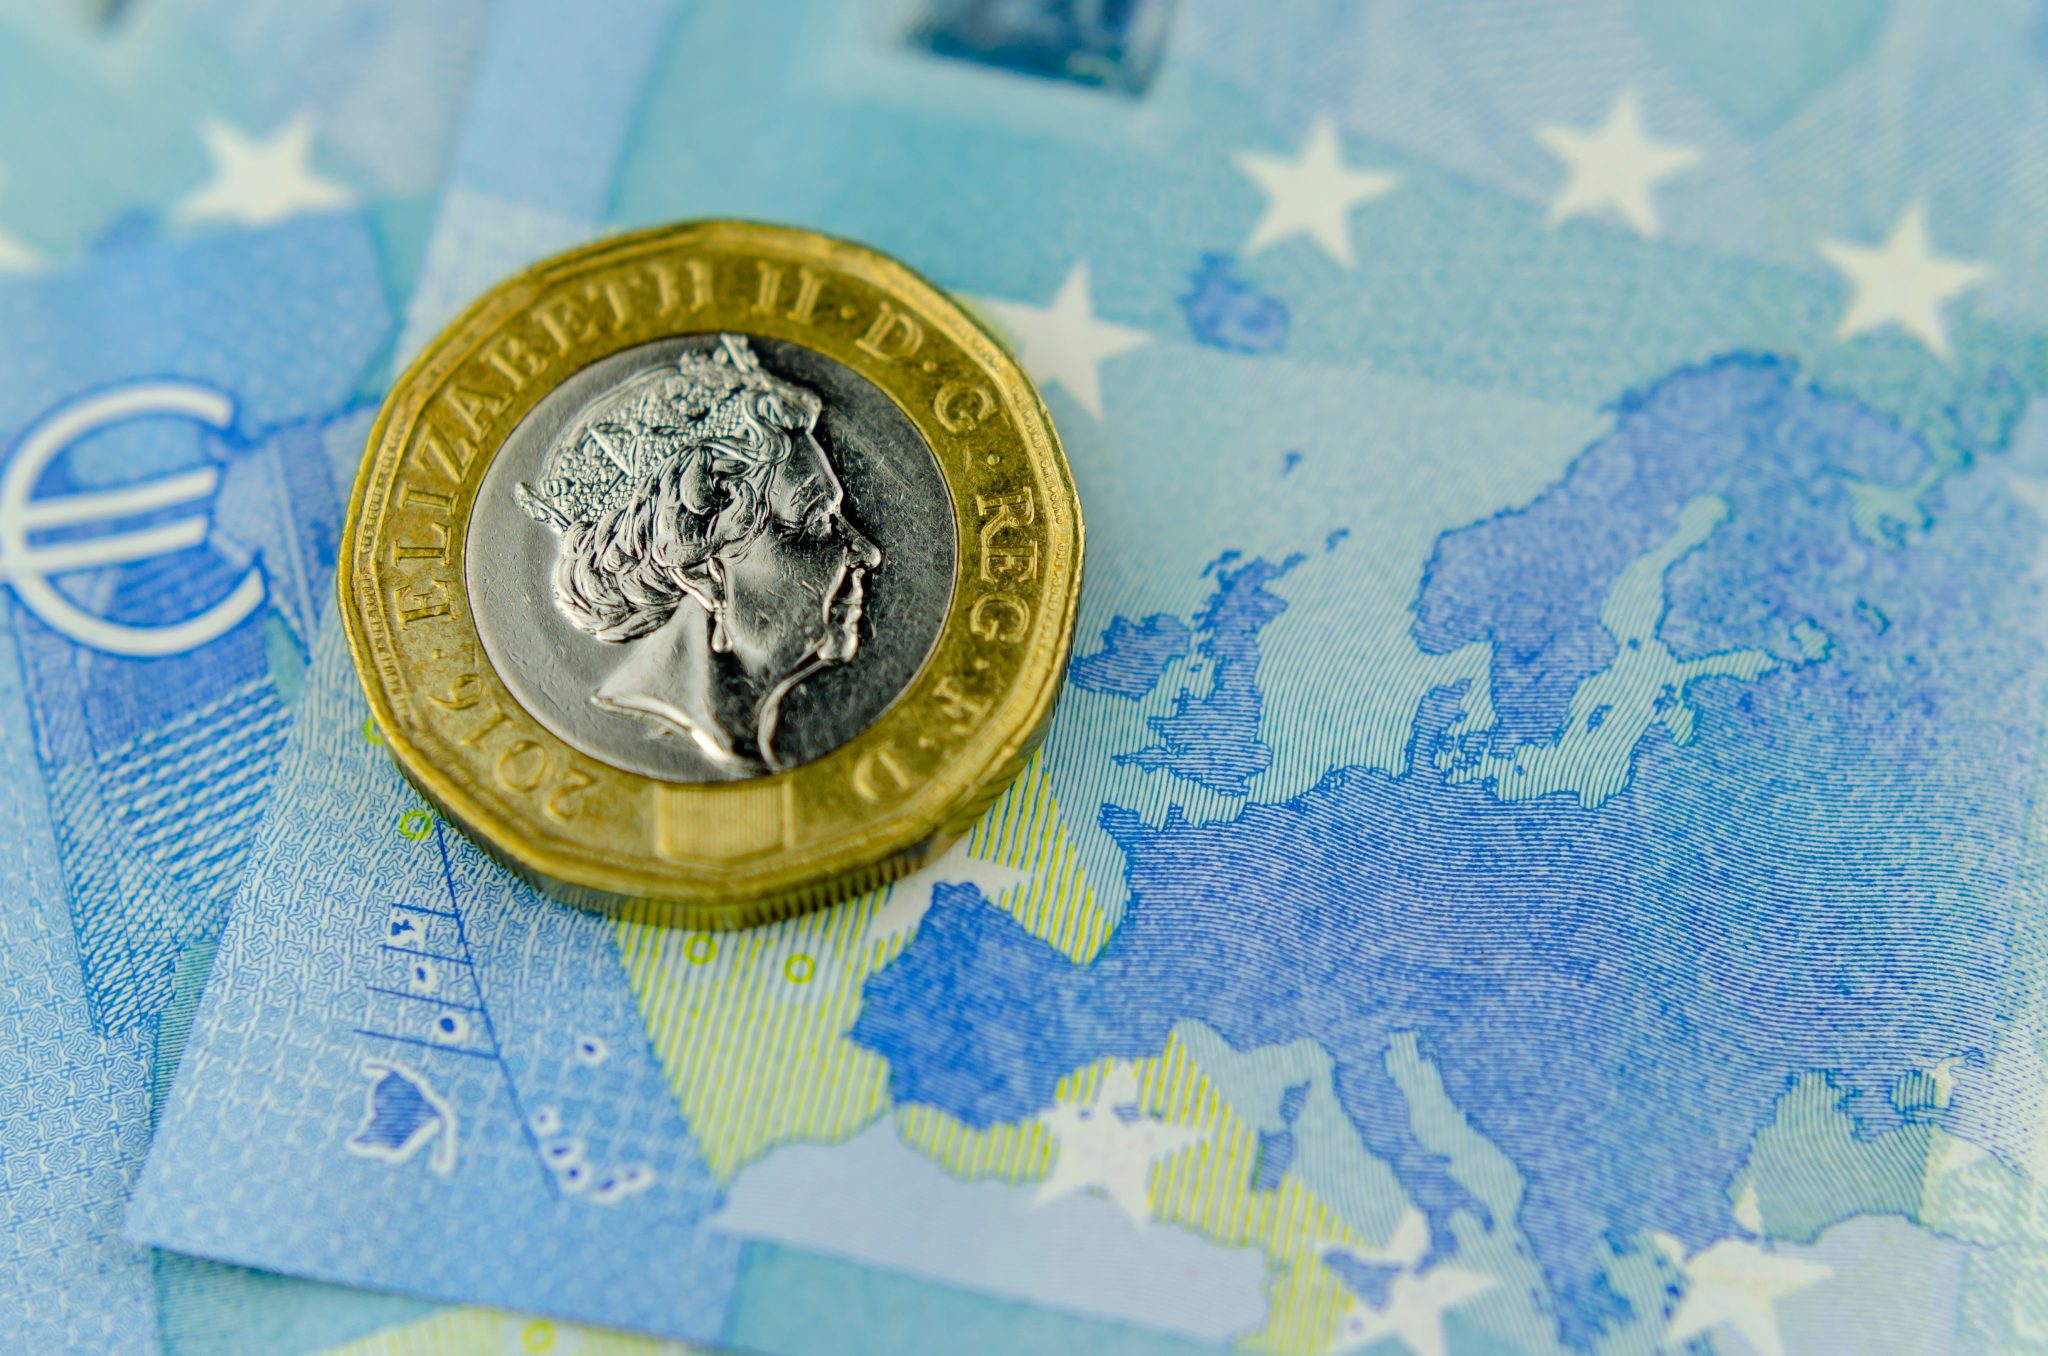 euro to pound exchange rate today